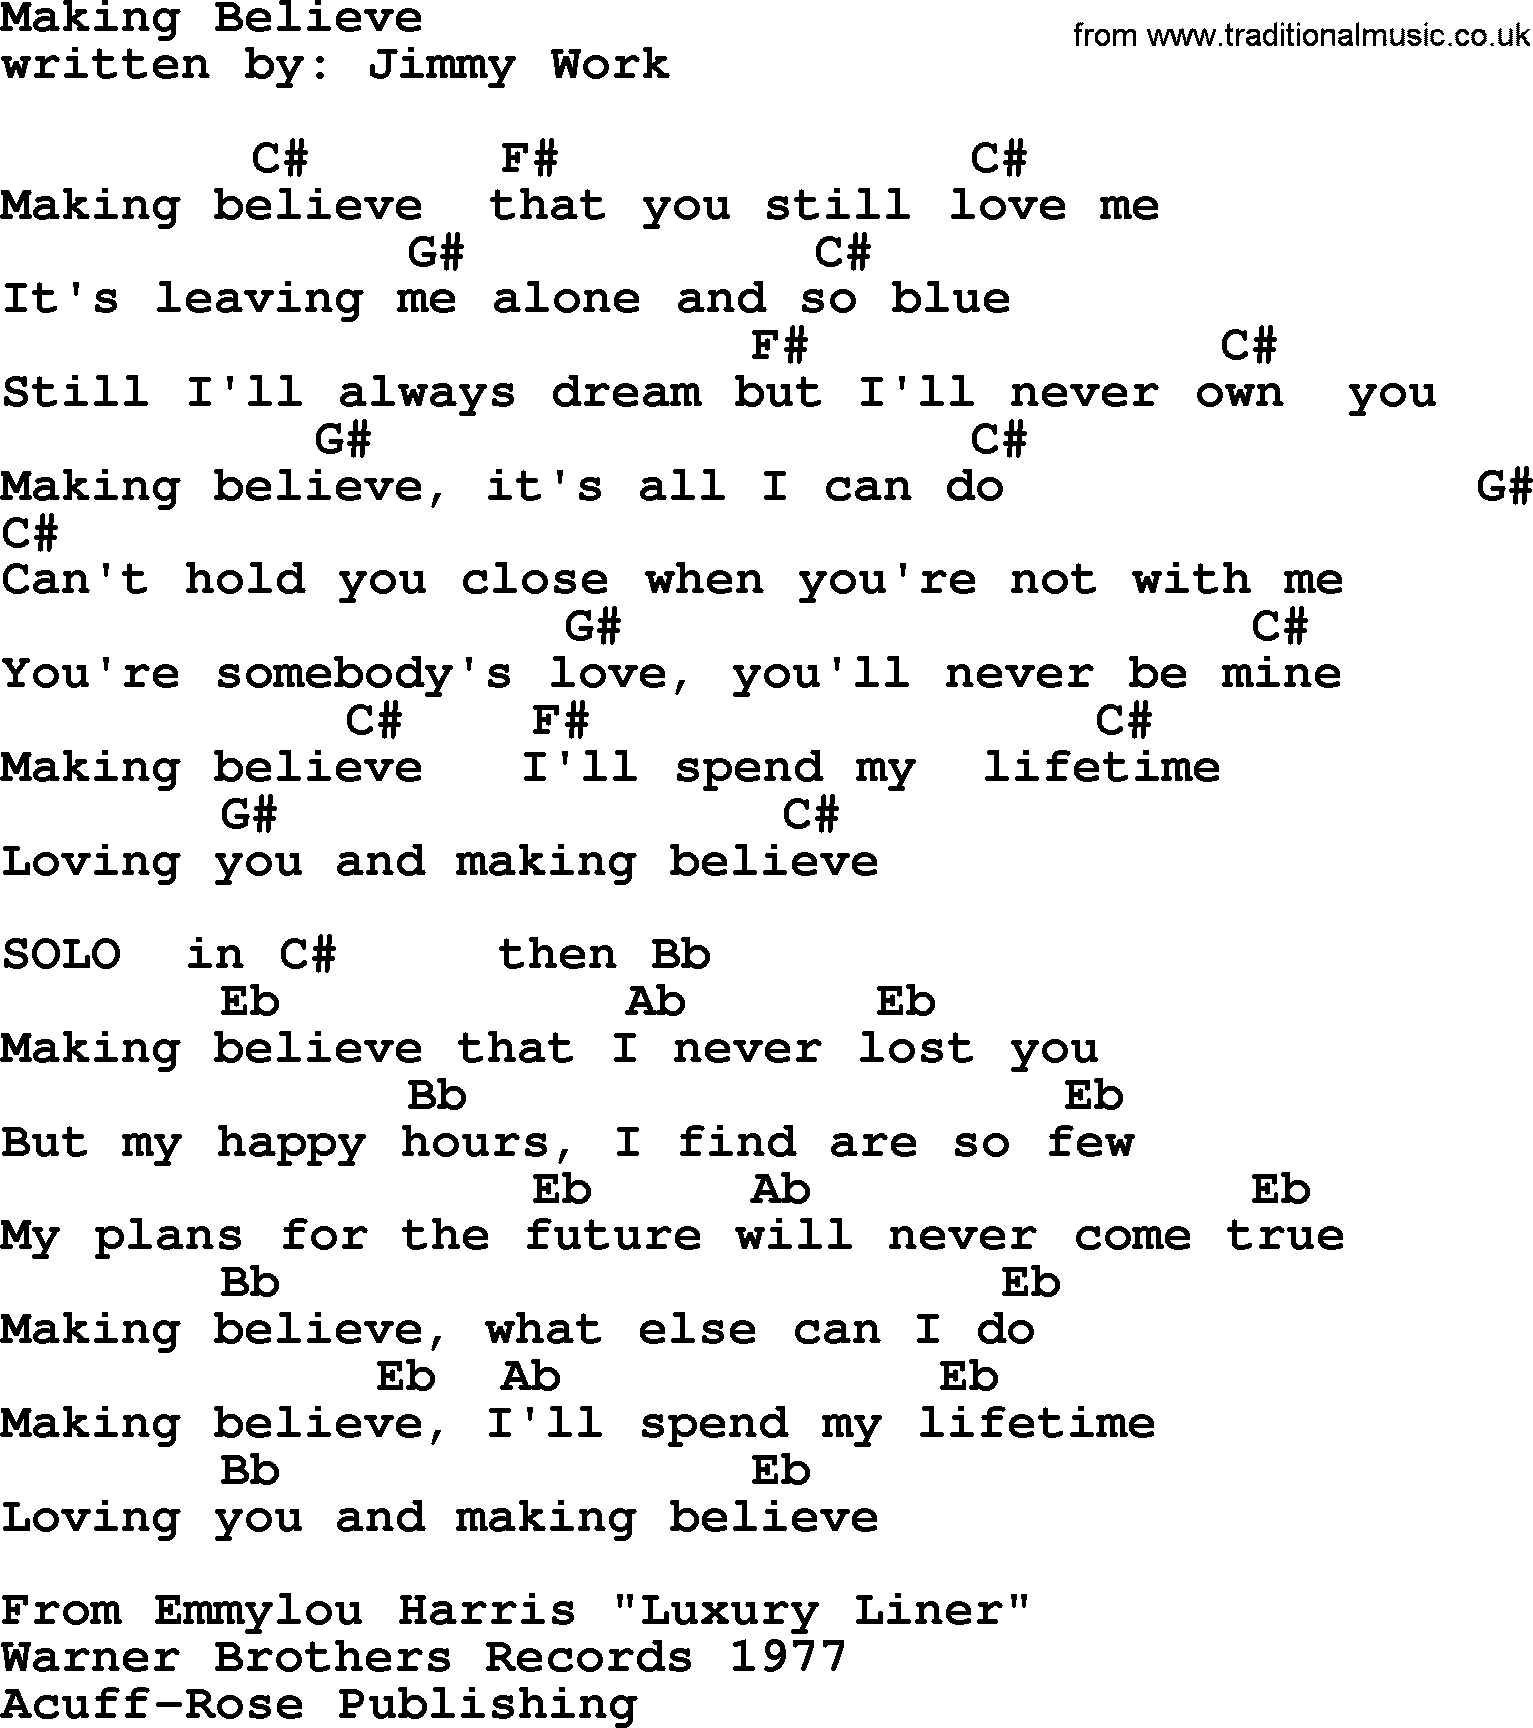 Emmylou Harris song: Making Believe lyrics and chords